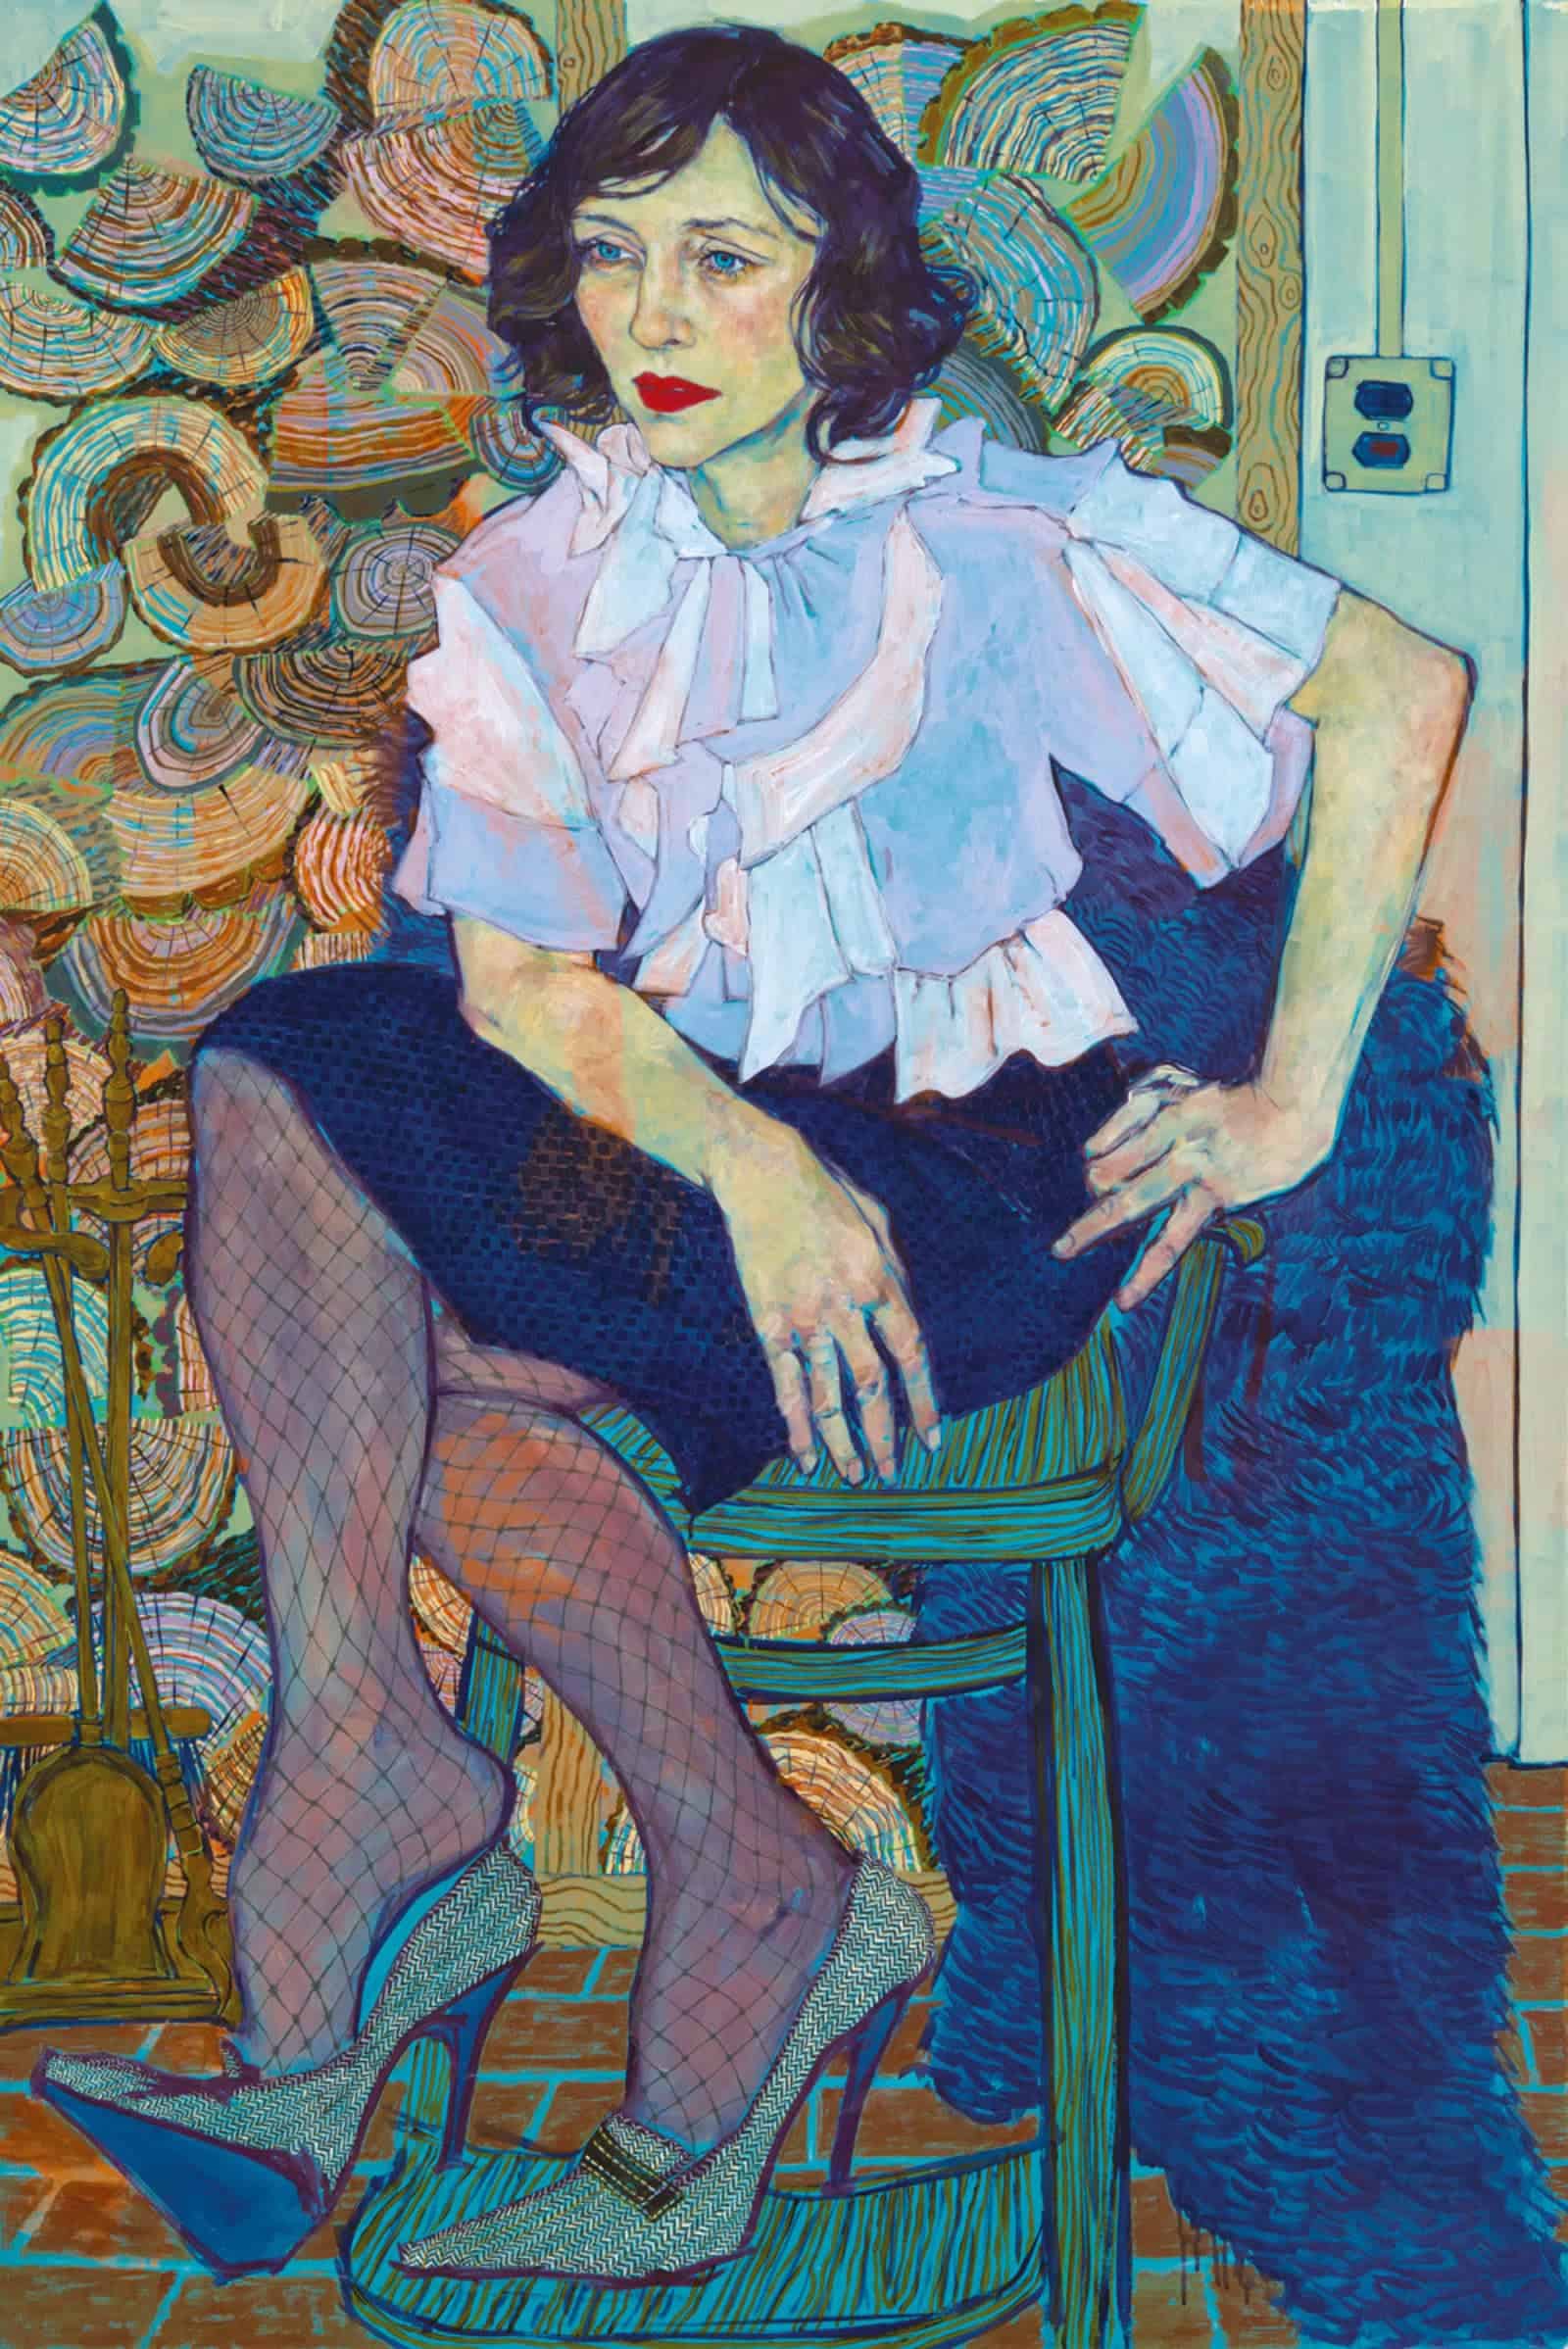 Vera, 2013, acrylic on canvas, 81 x 54 in.